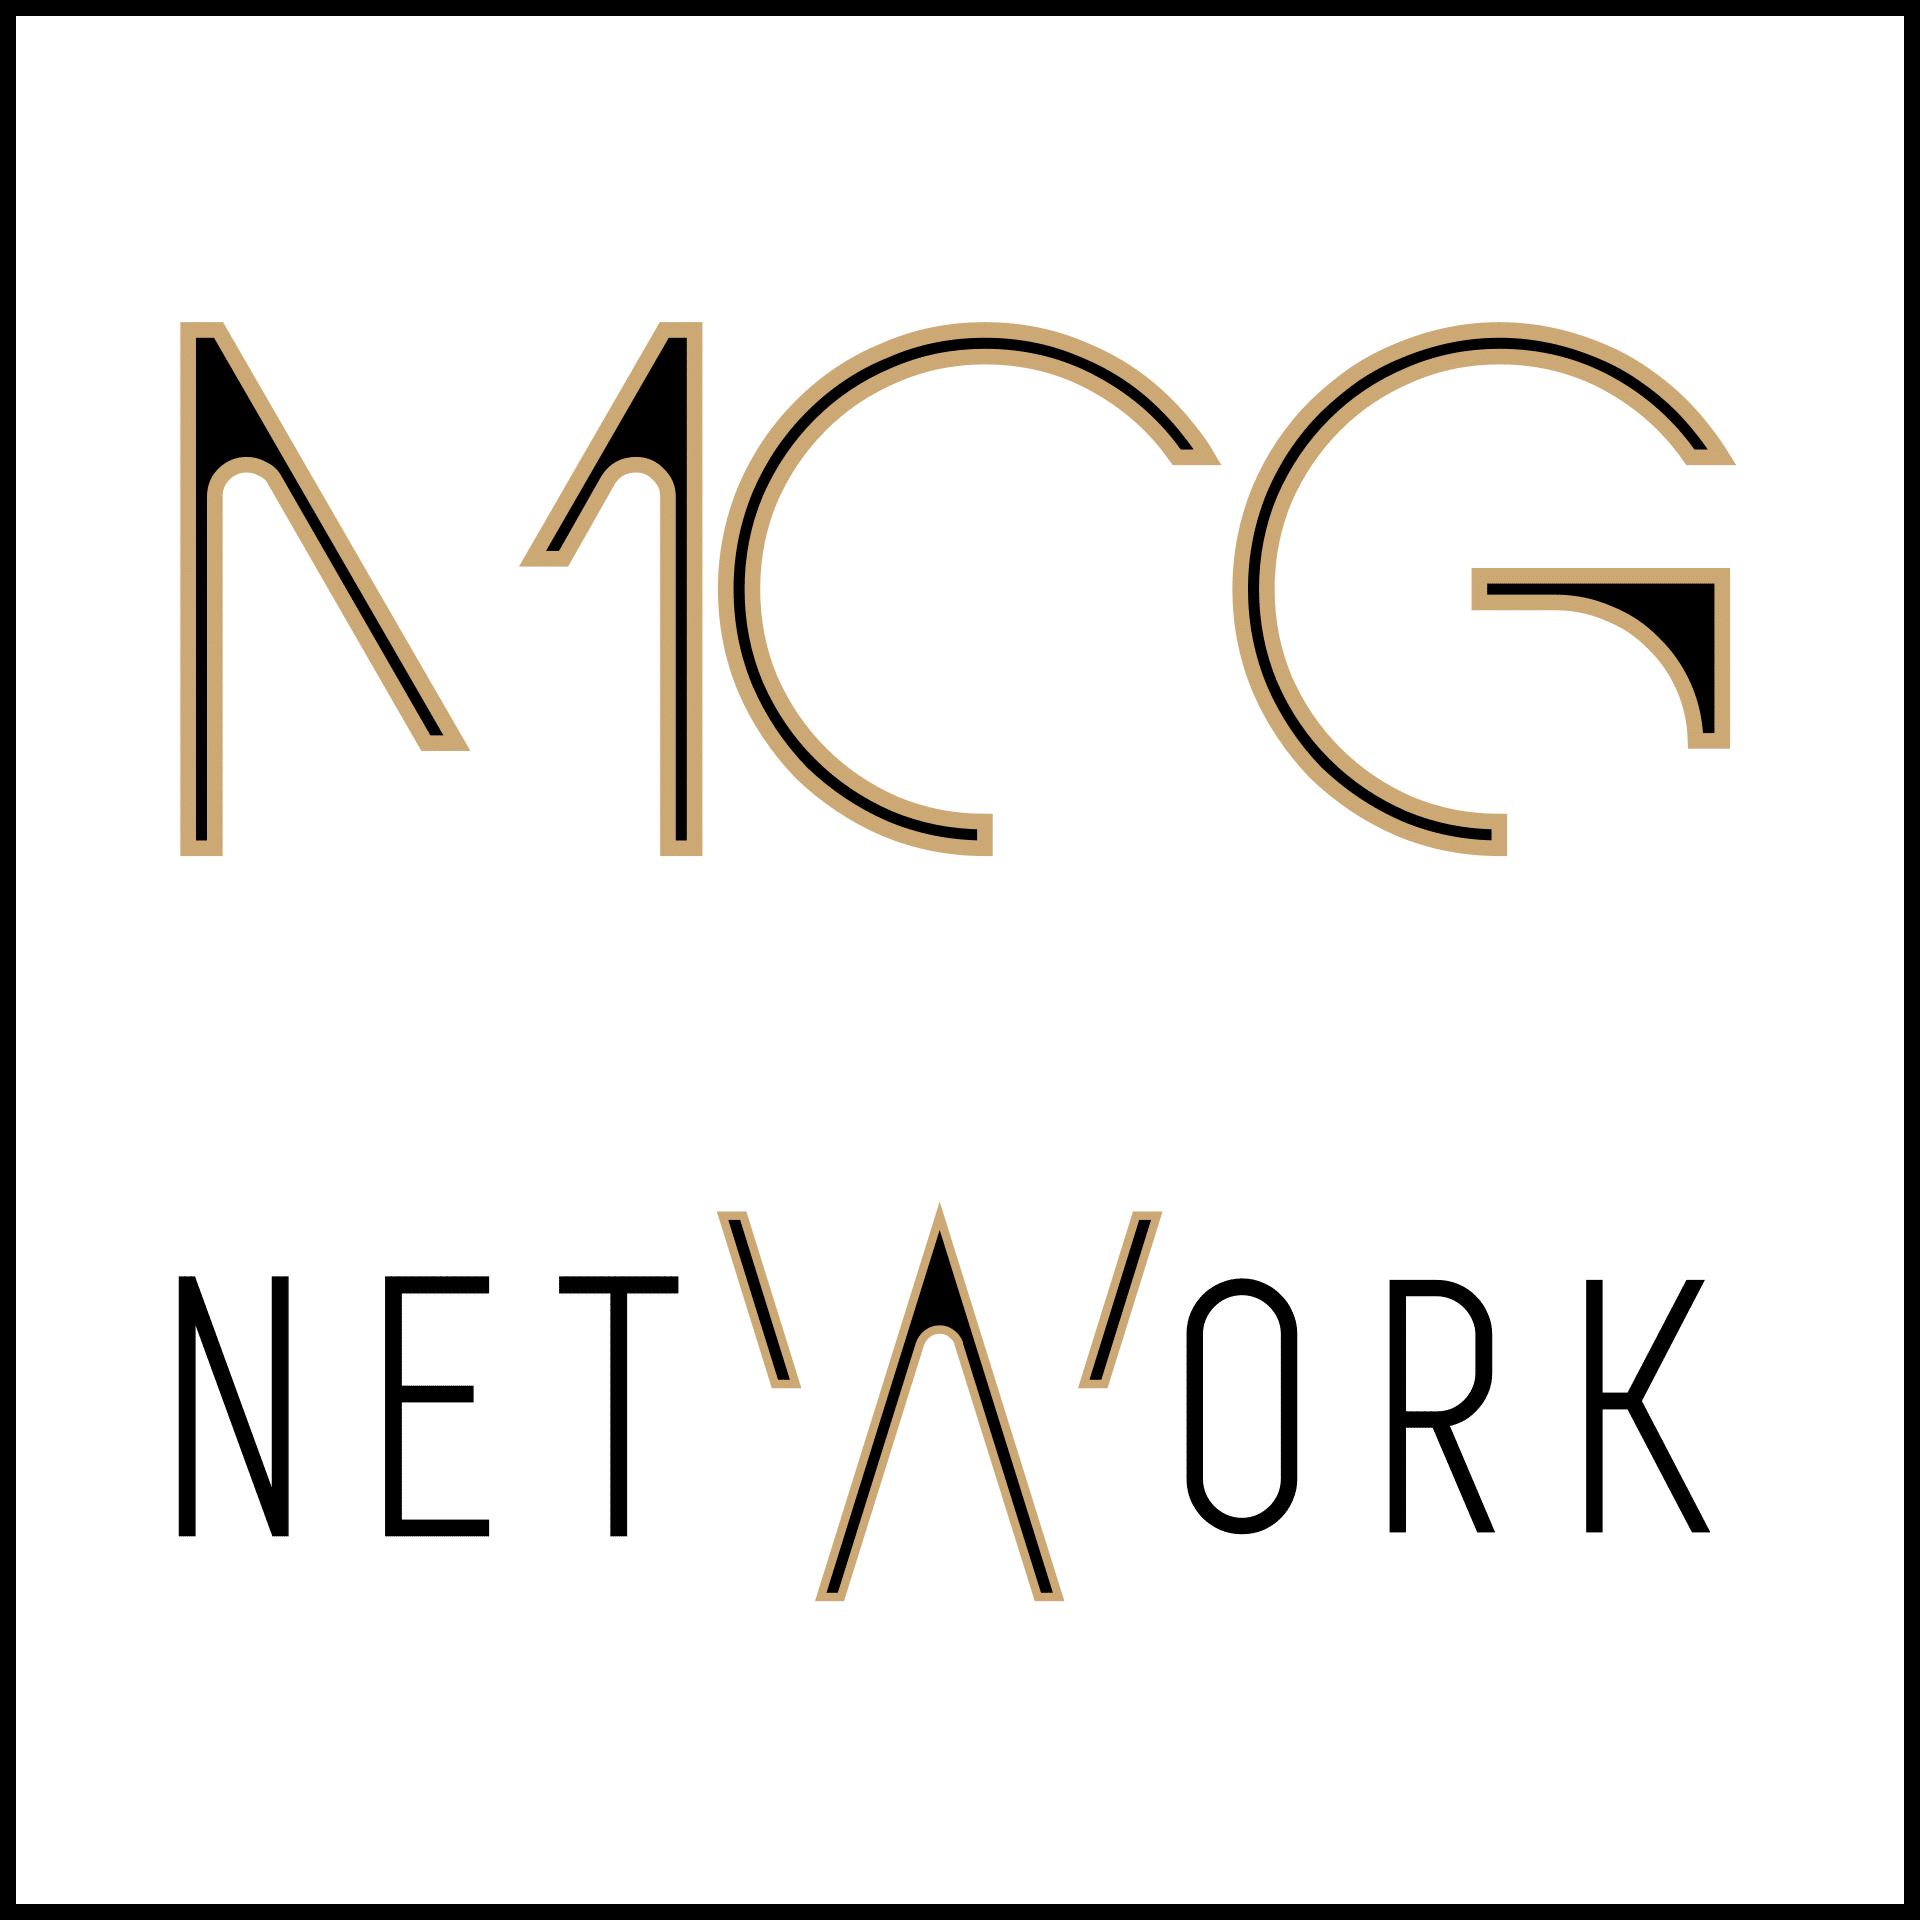 MCG Network